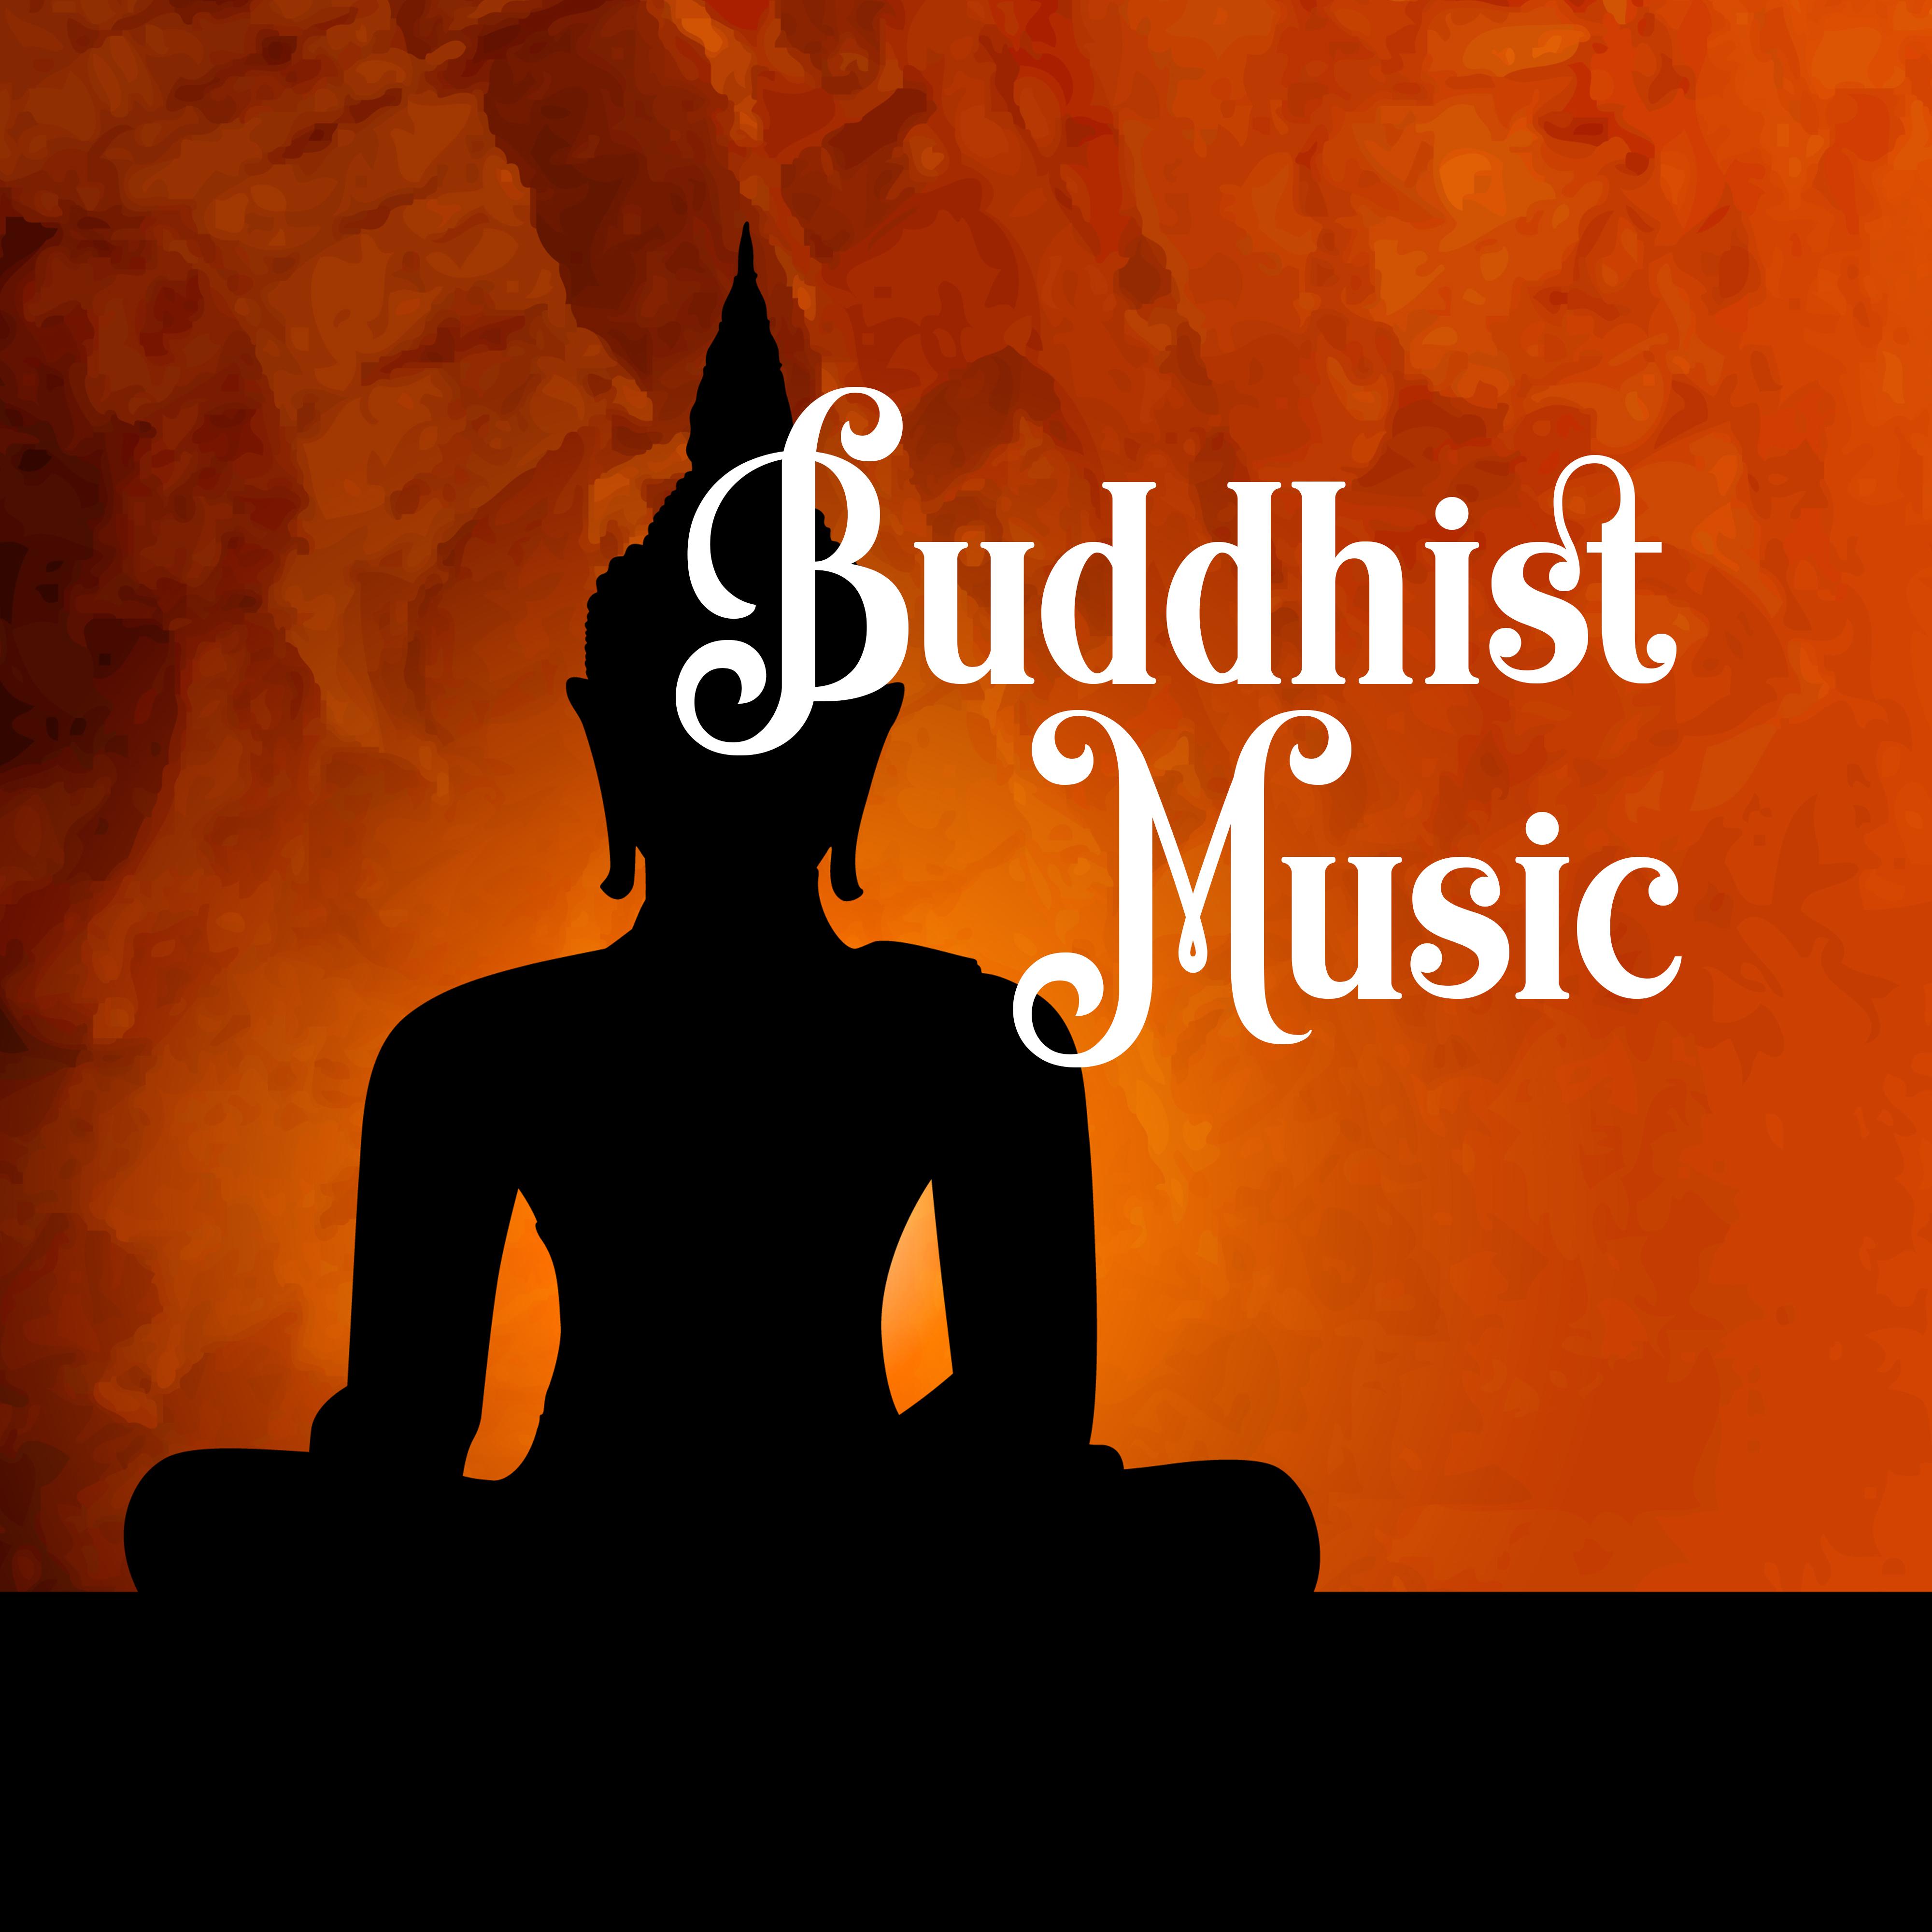 Buddhist Music for Deep Meditation, Yoga Practice, Reiki Treatment, Contemplation and Buddhist Rituals